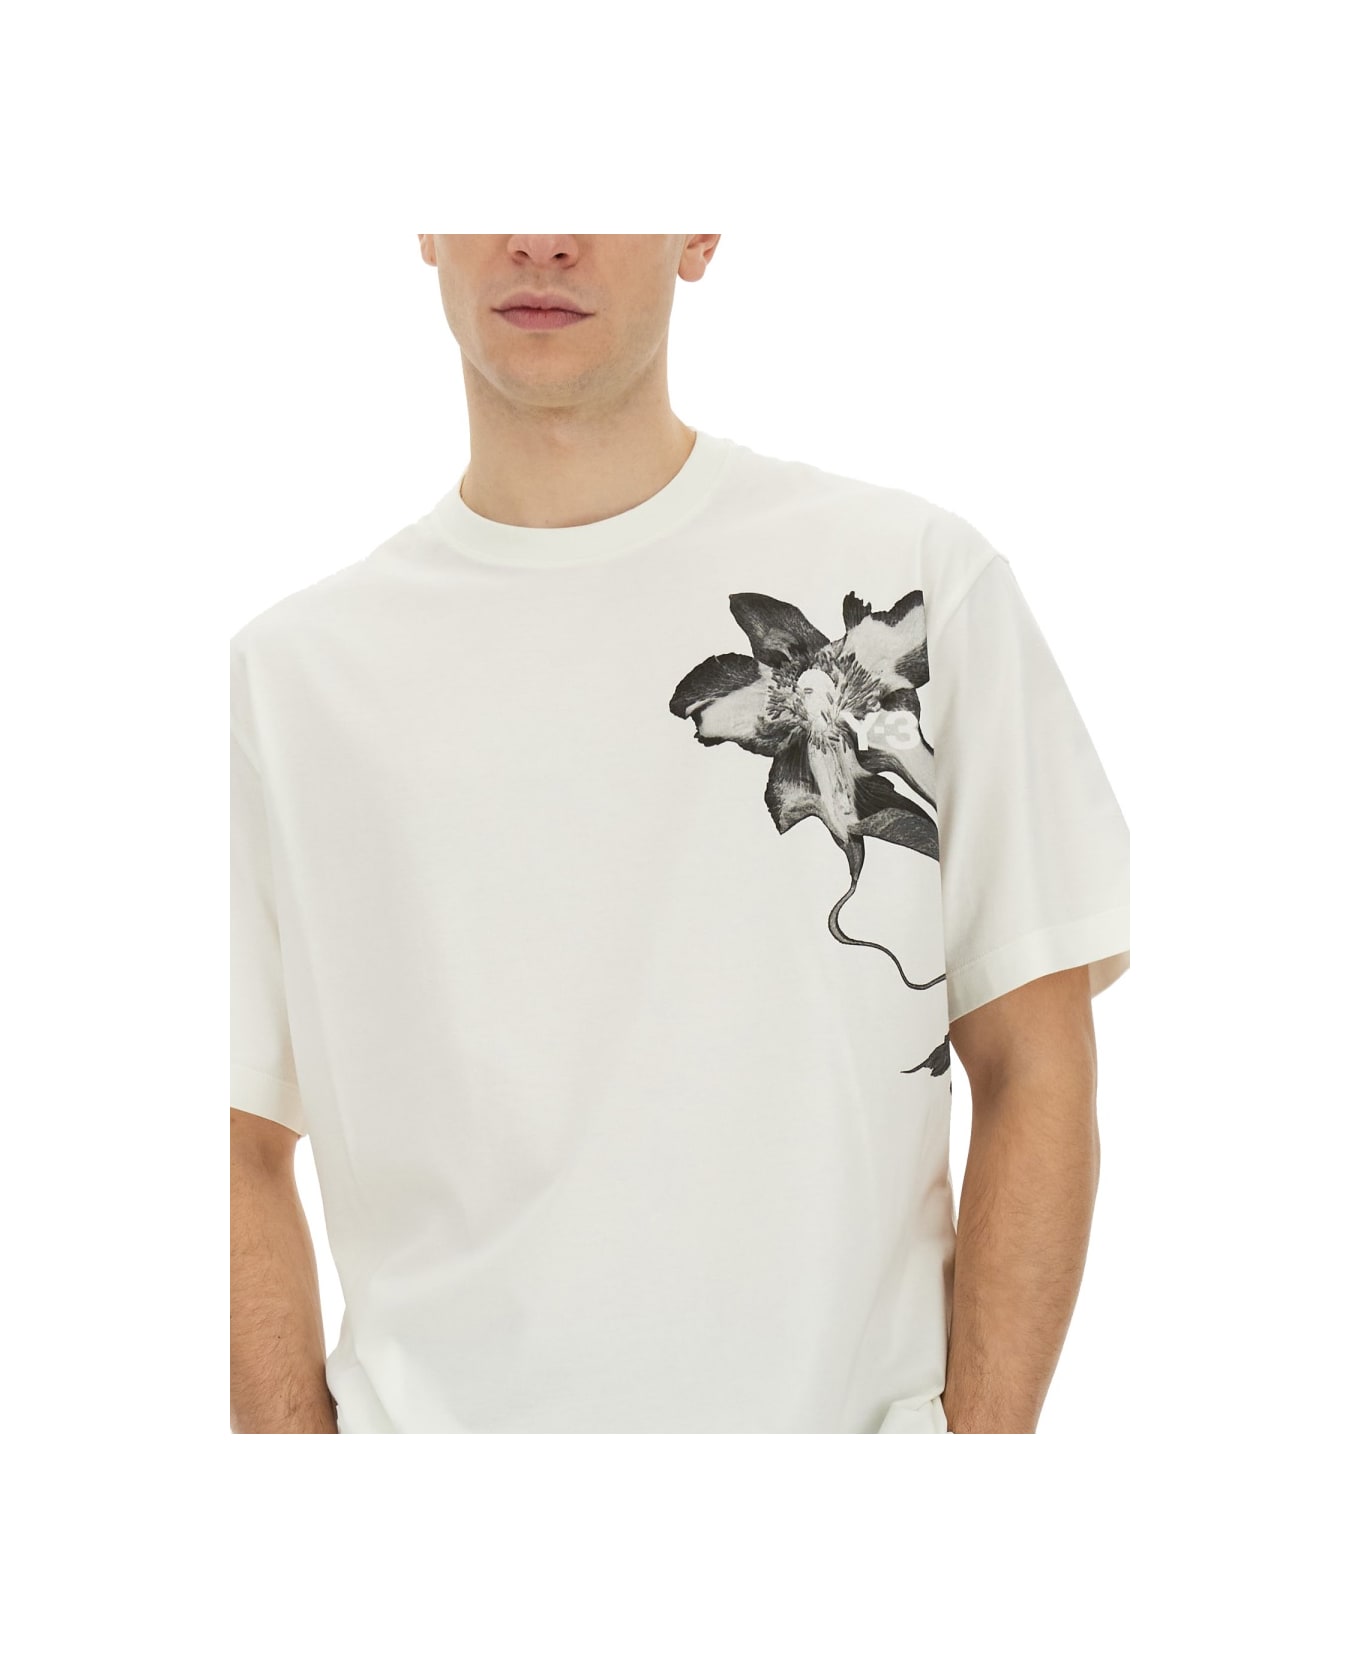 Y-3 Cotton T-shirt - WHITE